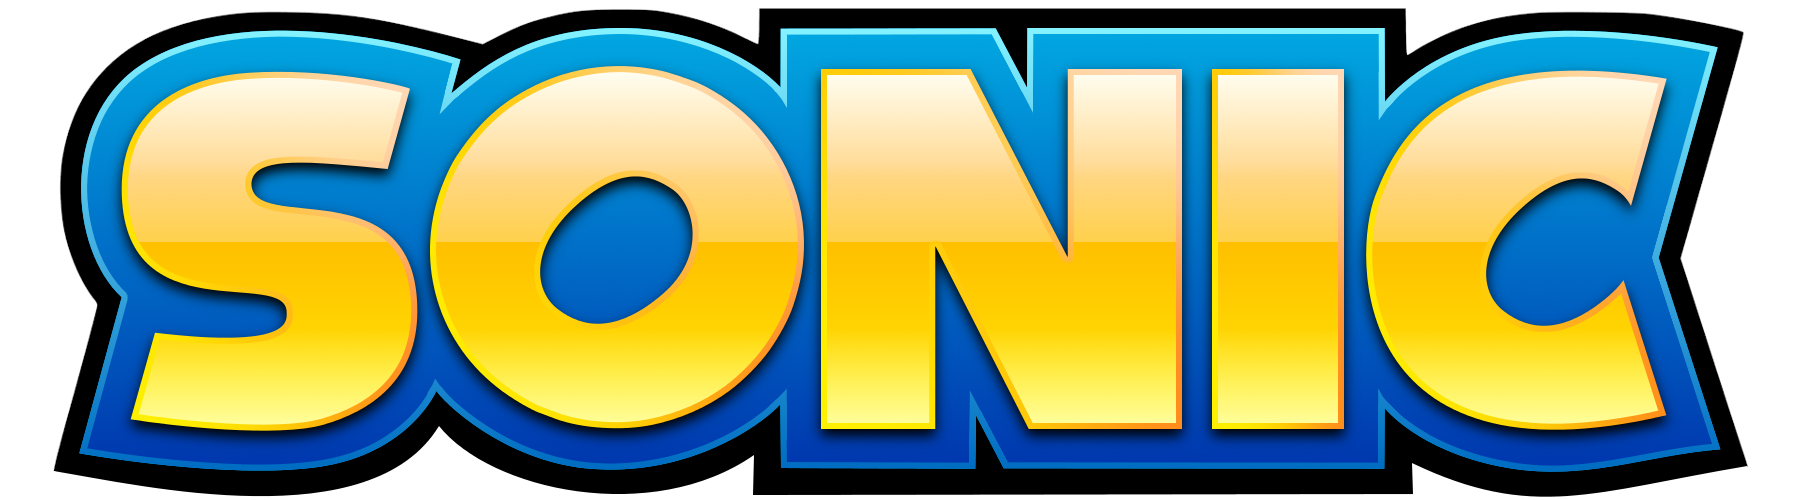 Pin Sonic Drive Logos